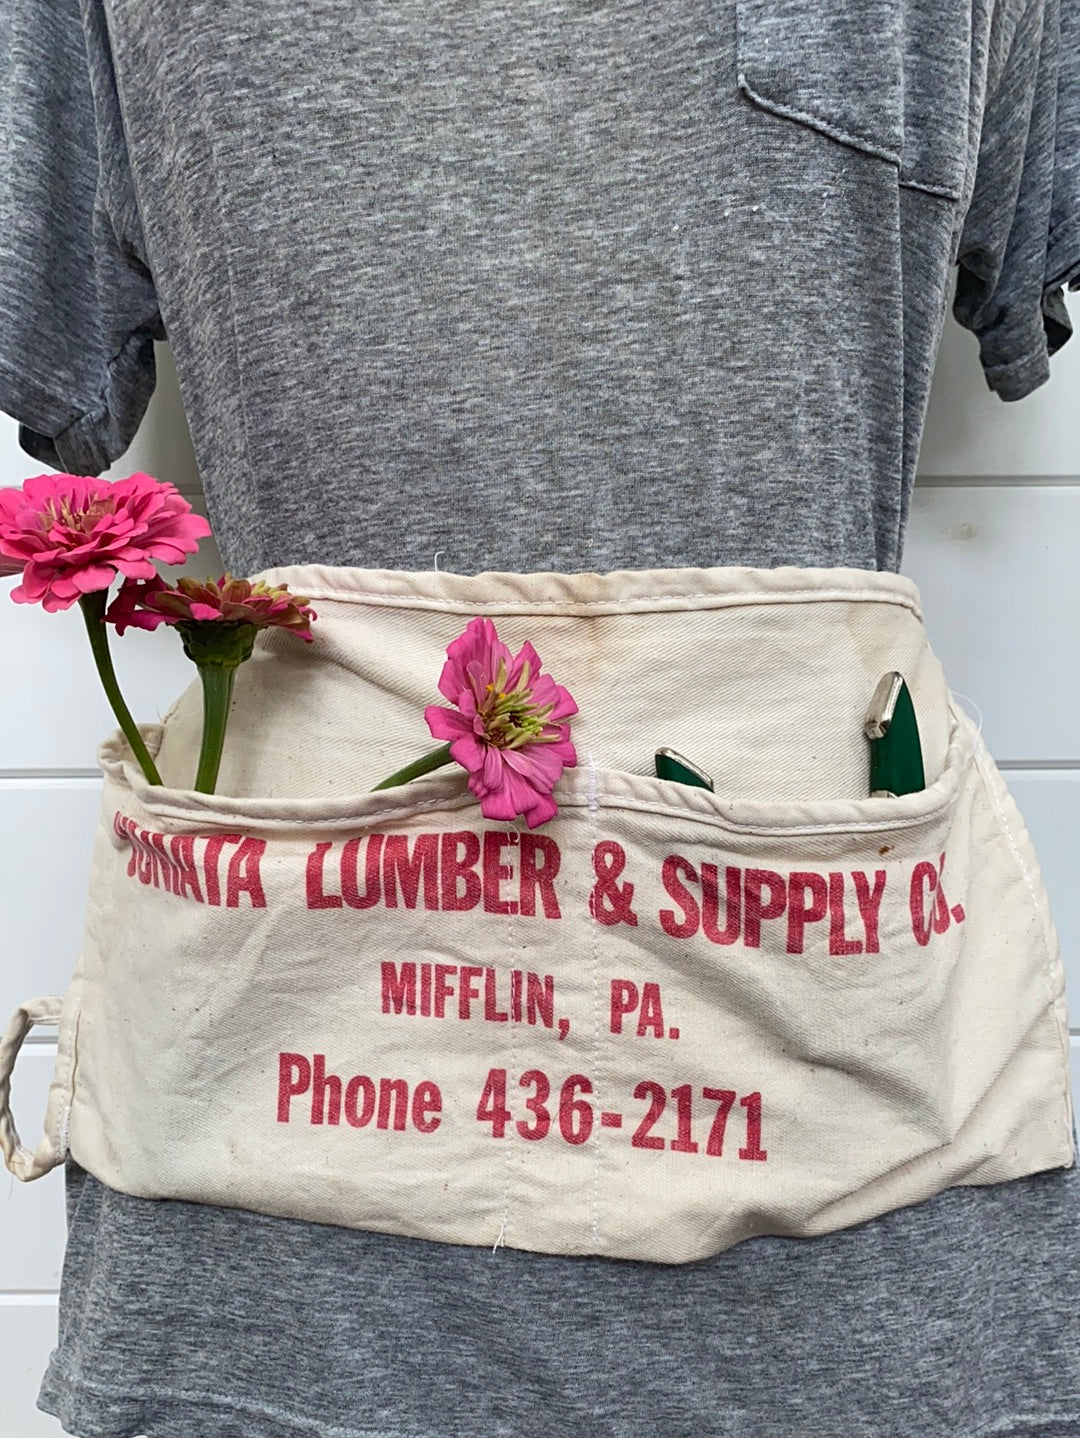 Vintage Juniata Lumber & Supply Co. Apron